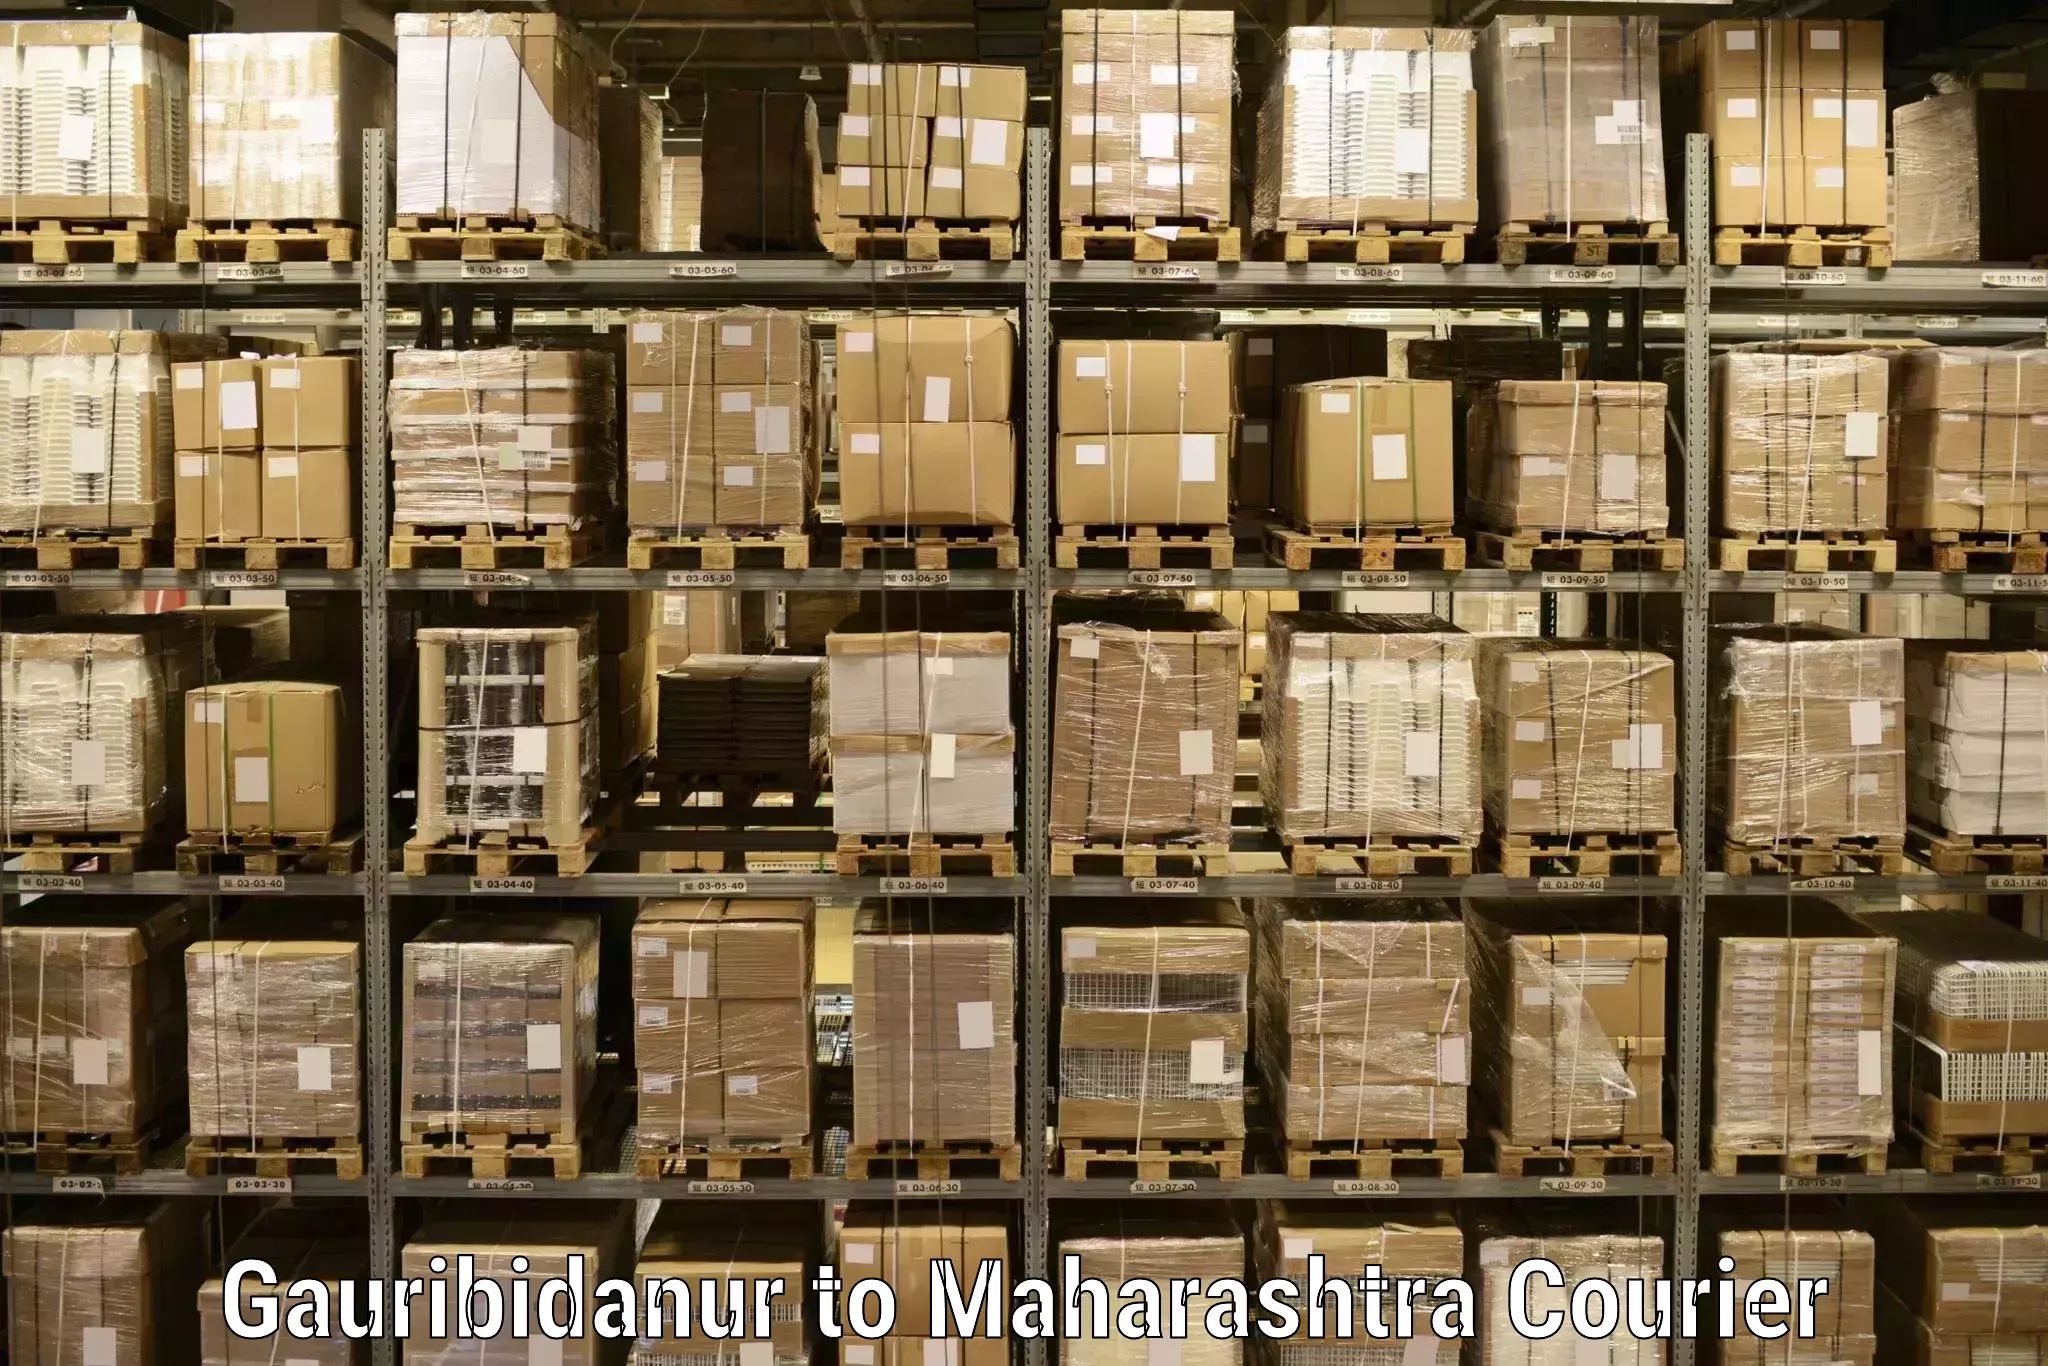 Multi-service courier options Gauribidanur to Phaltan